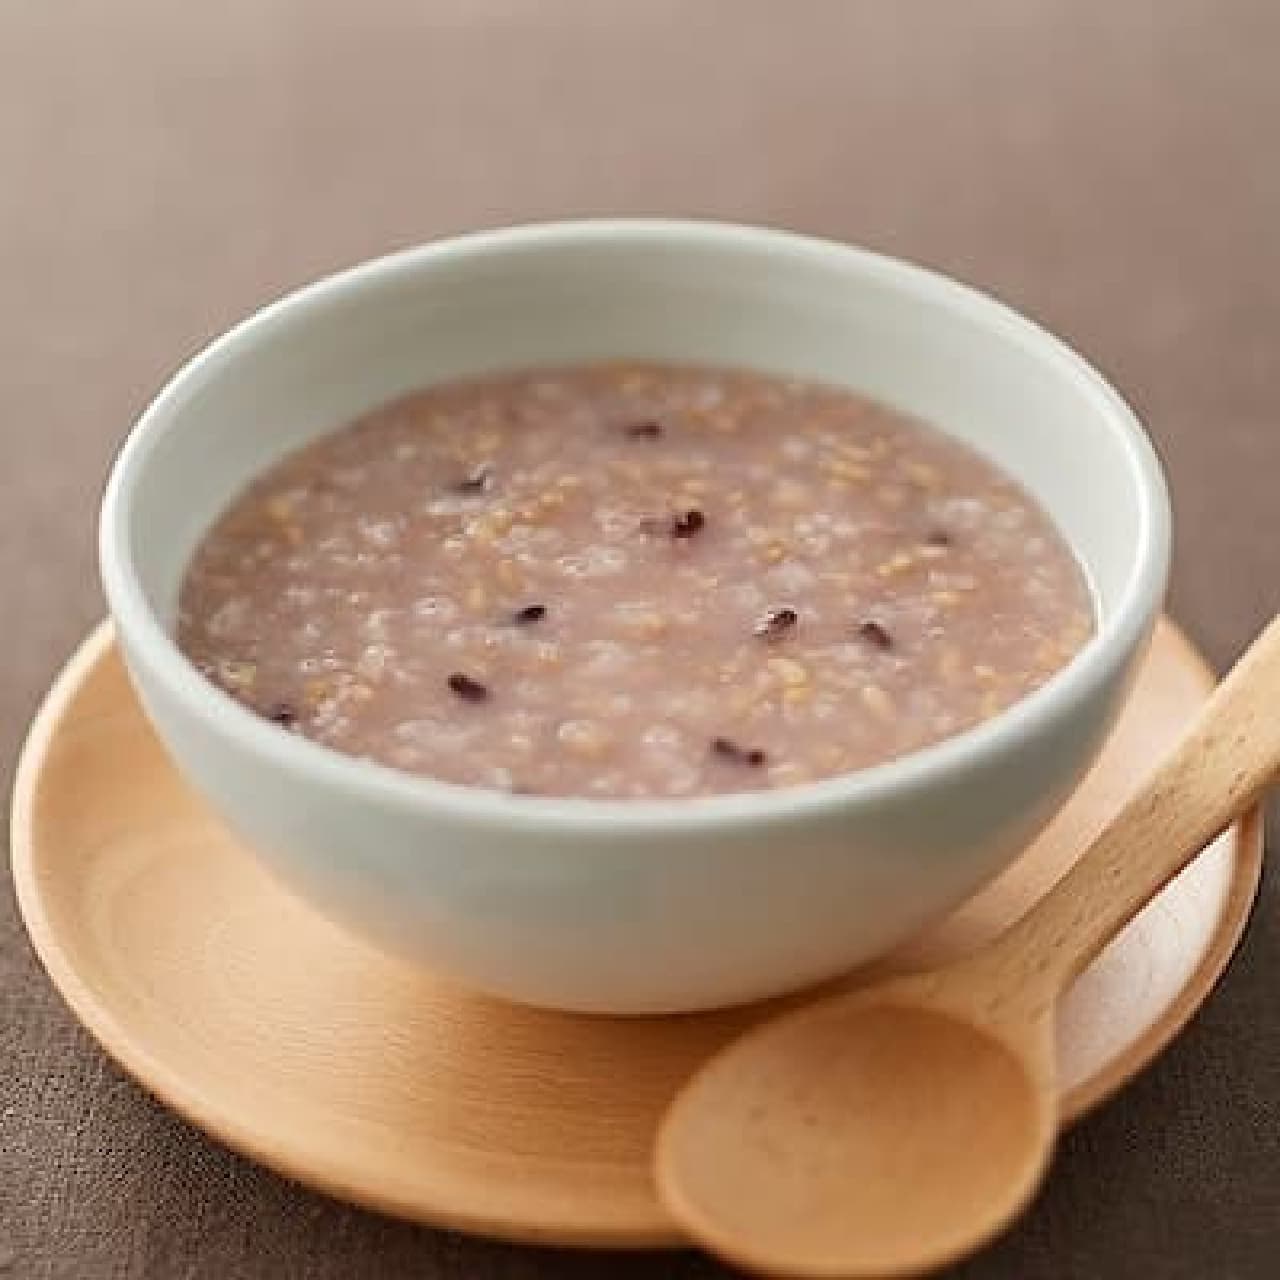 MUJI "Brown rice and rice cake porridge made from raw materials" "Ten-grain rice porridge made from raw materials" "Millet porridge zenzai made from raw materials"